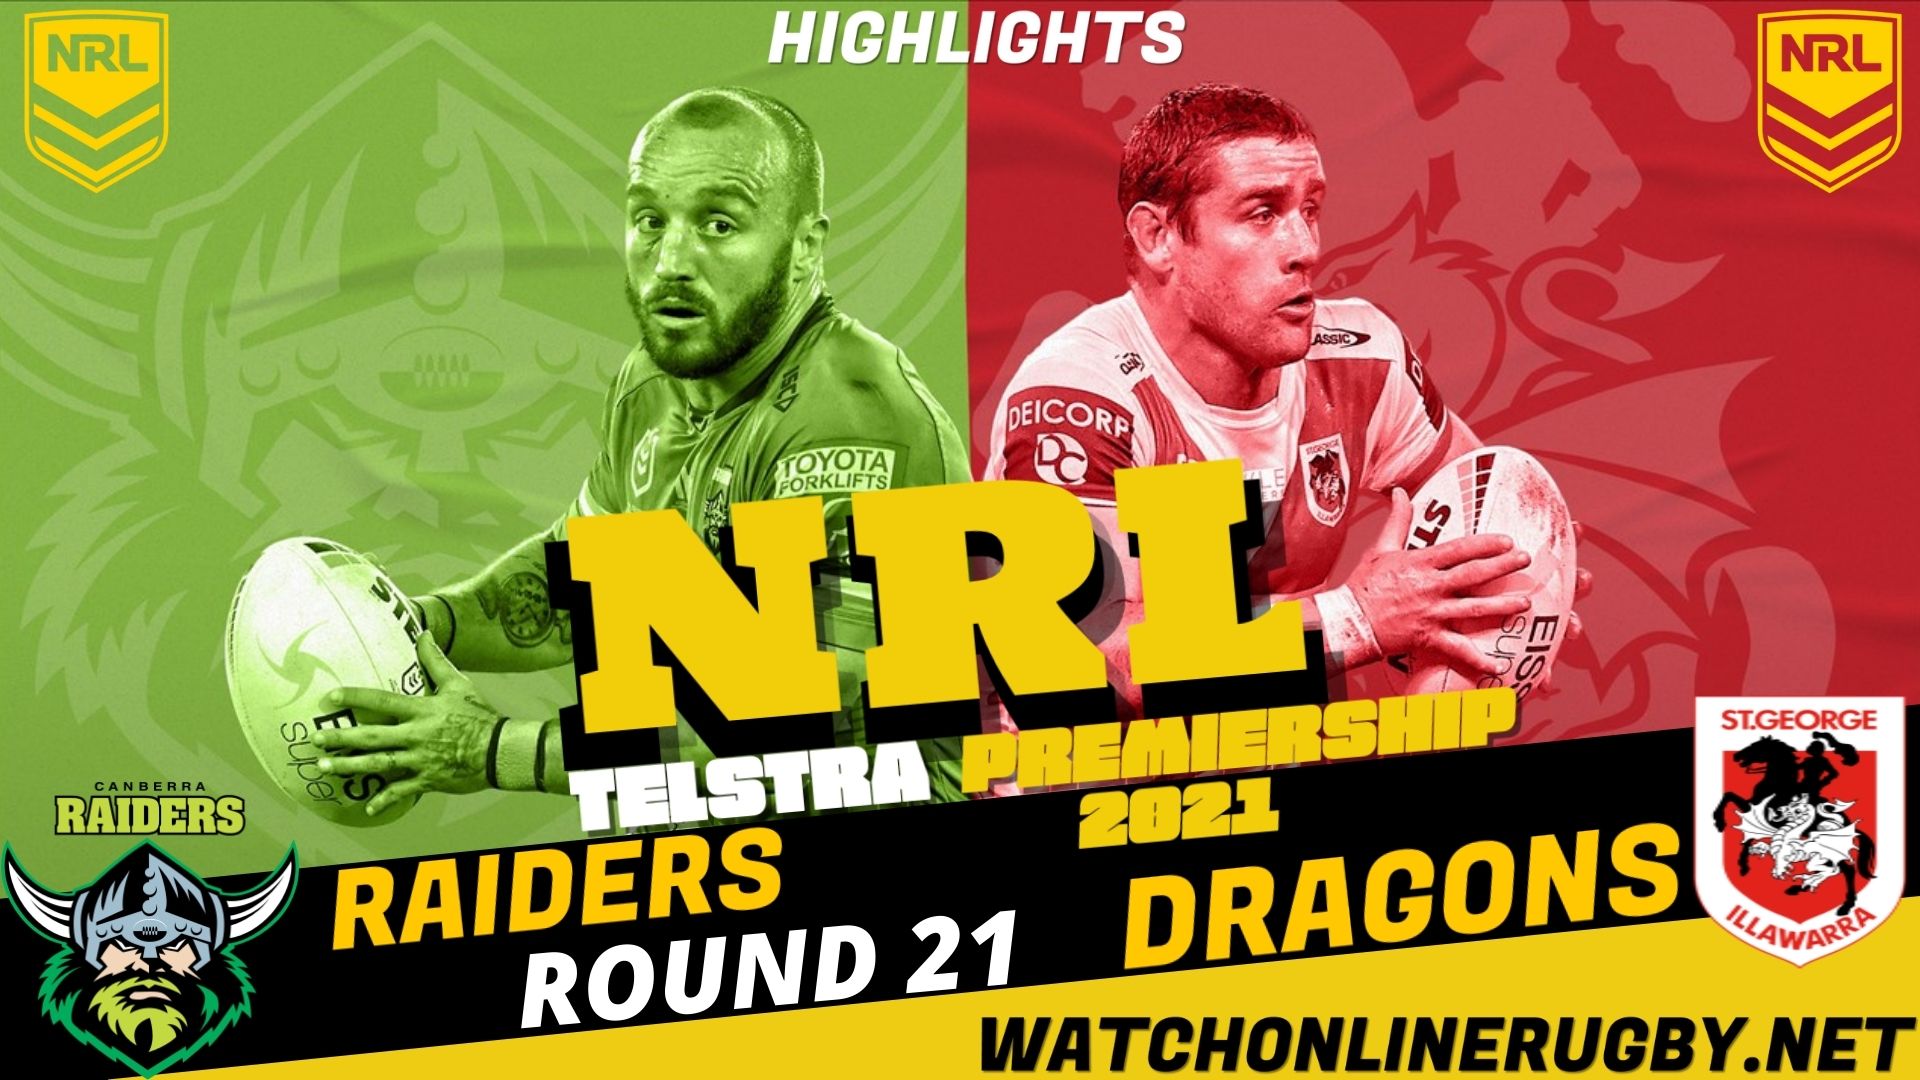 Raiders Vs Dragons Highlights RD 21 NRL Rugby